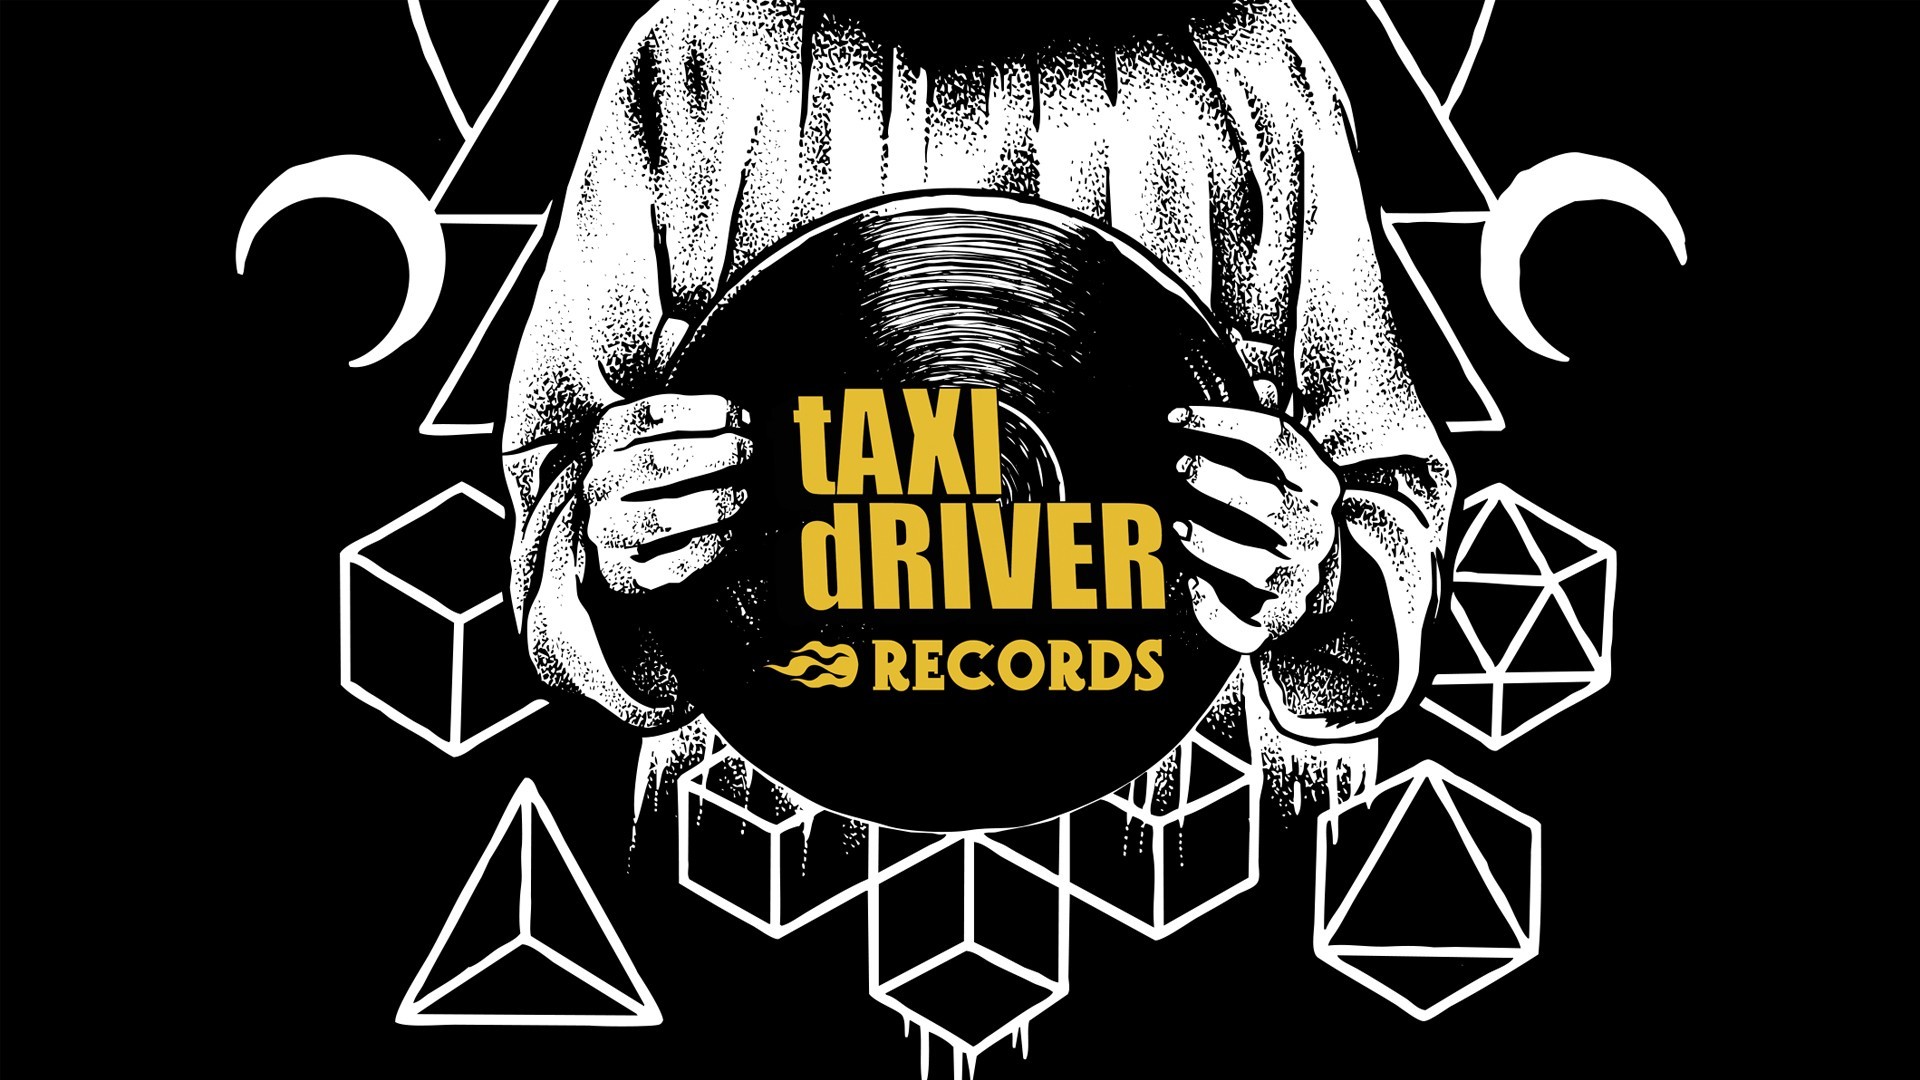 1920x1080 ... Taxi Driver Records ...